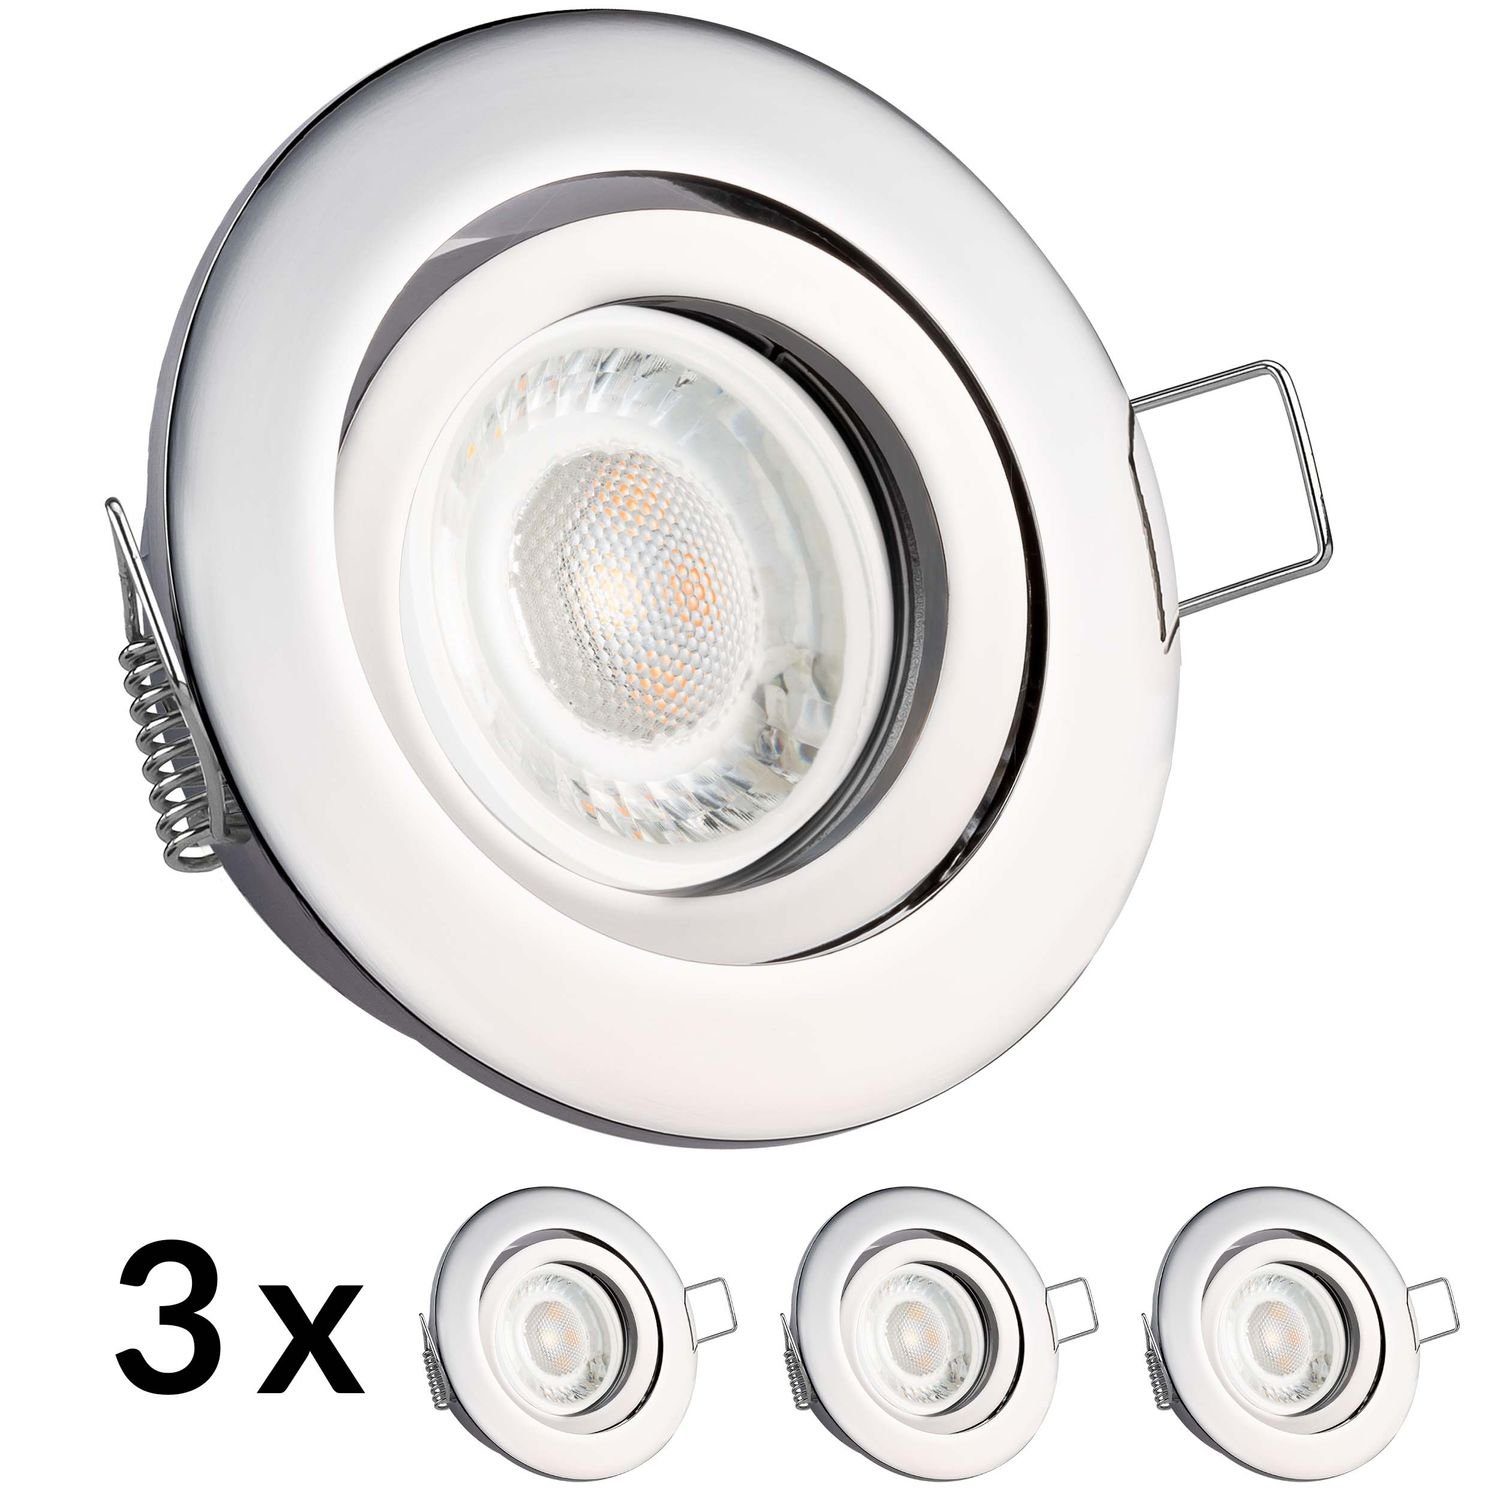 100% nagelneu LEDANDO LED flach 5W Einbaustrahler LED 3er Einbaustrahler in chrom Leuchtmittel extra vo mit Set